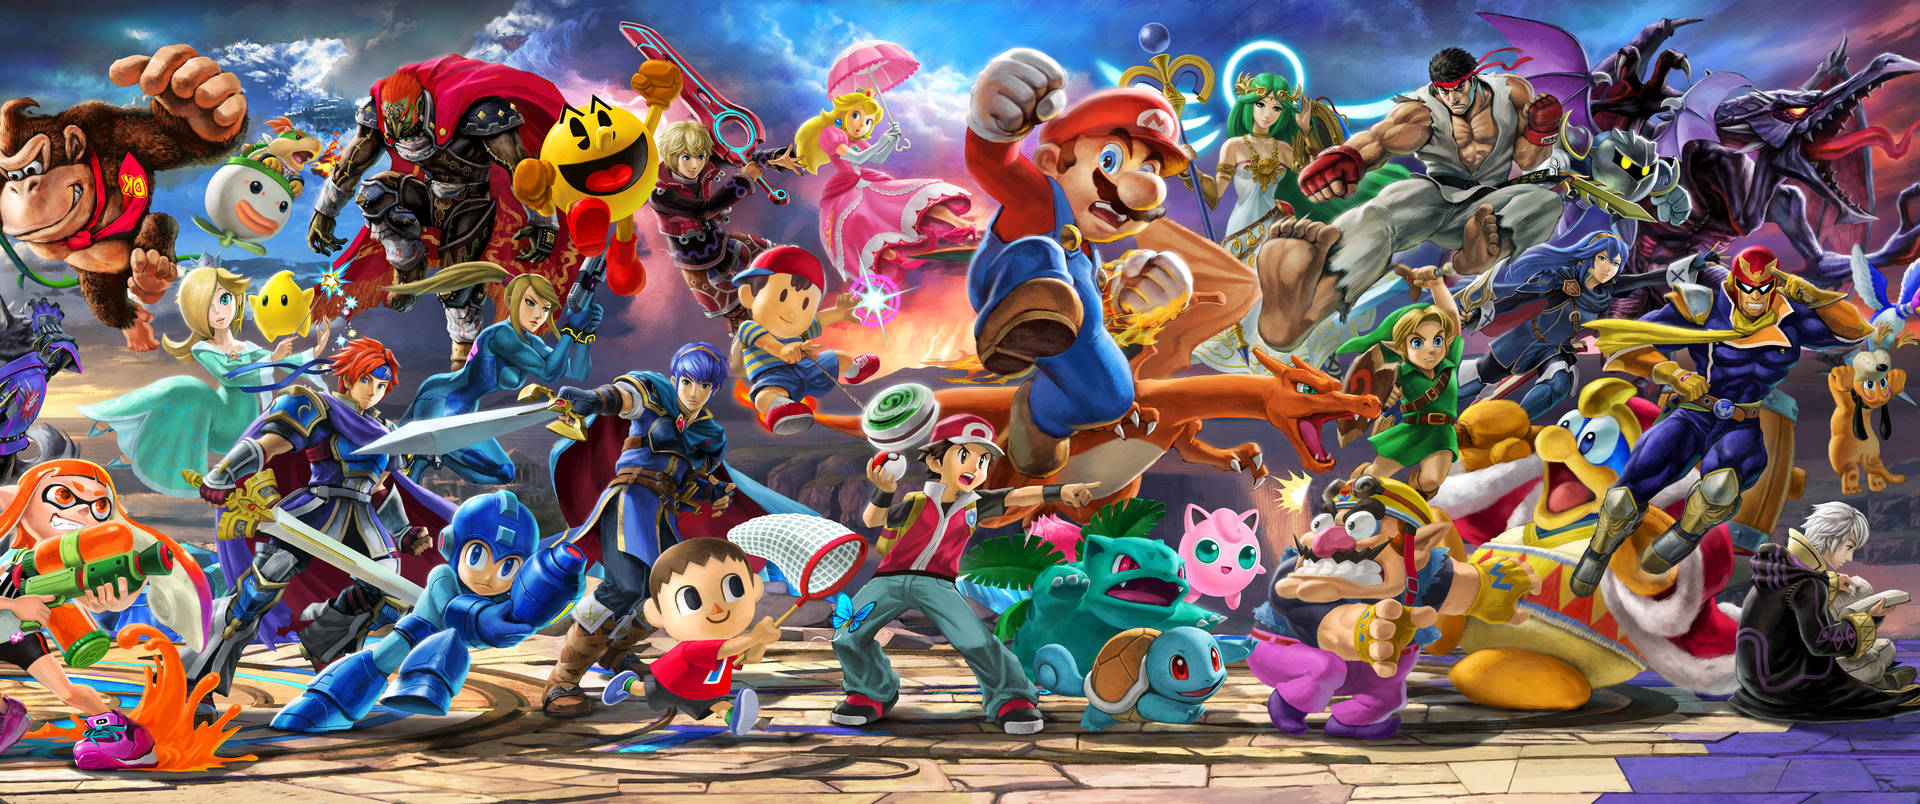 Smash Bros Ultimate Background Wallpaper